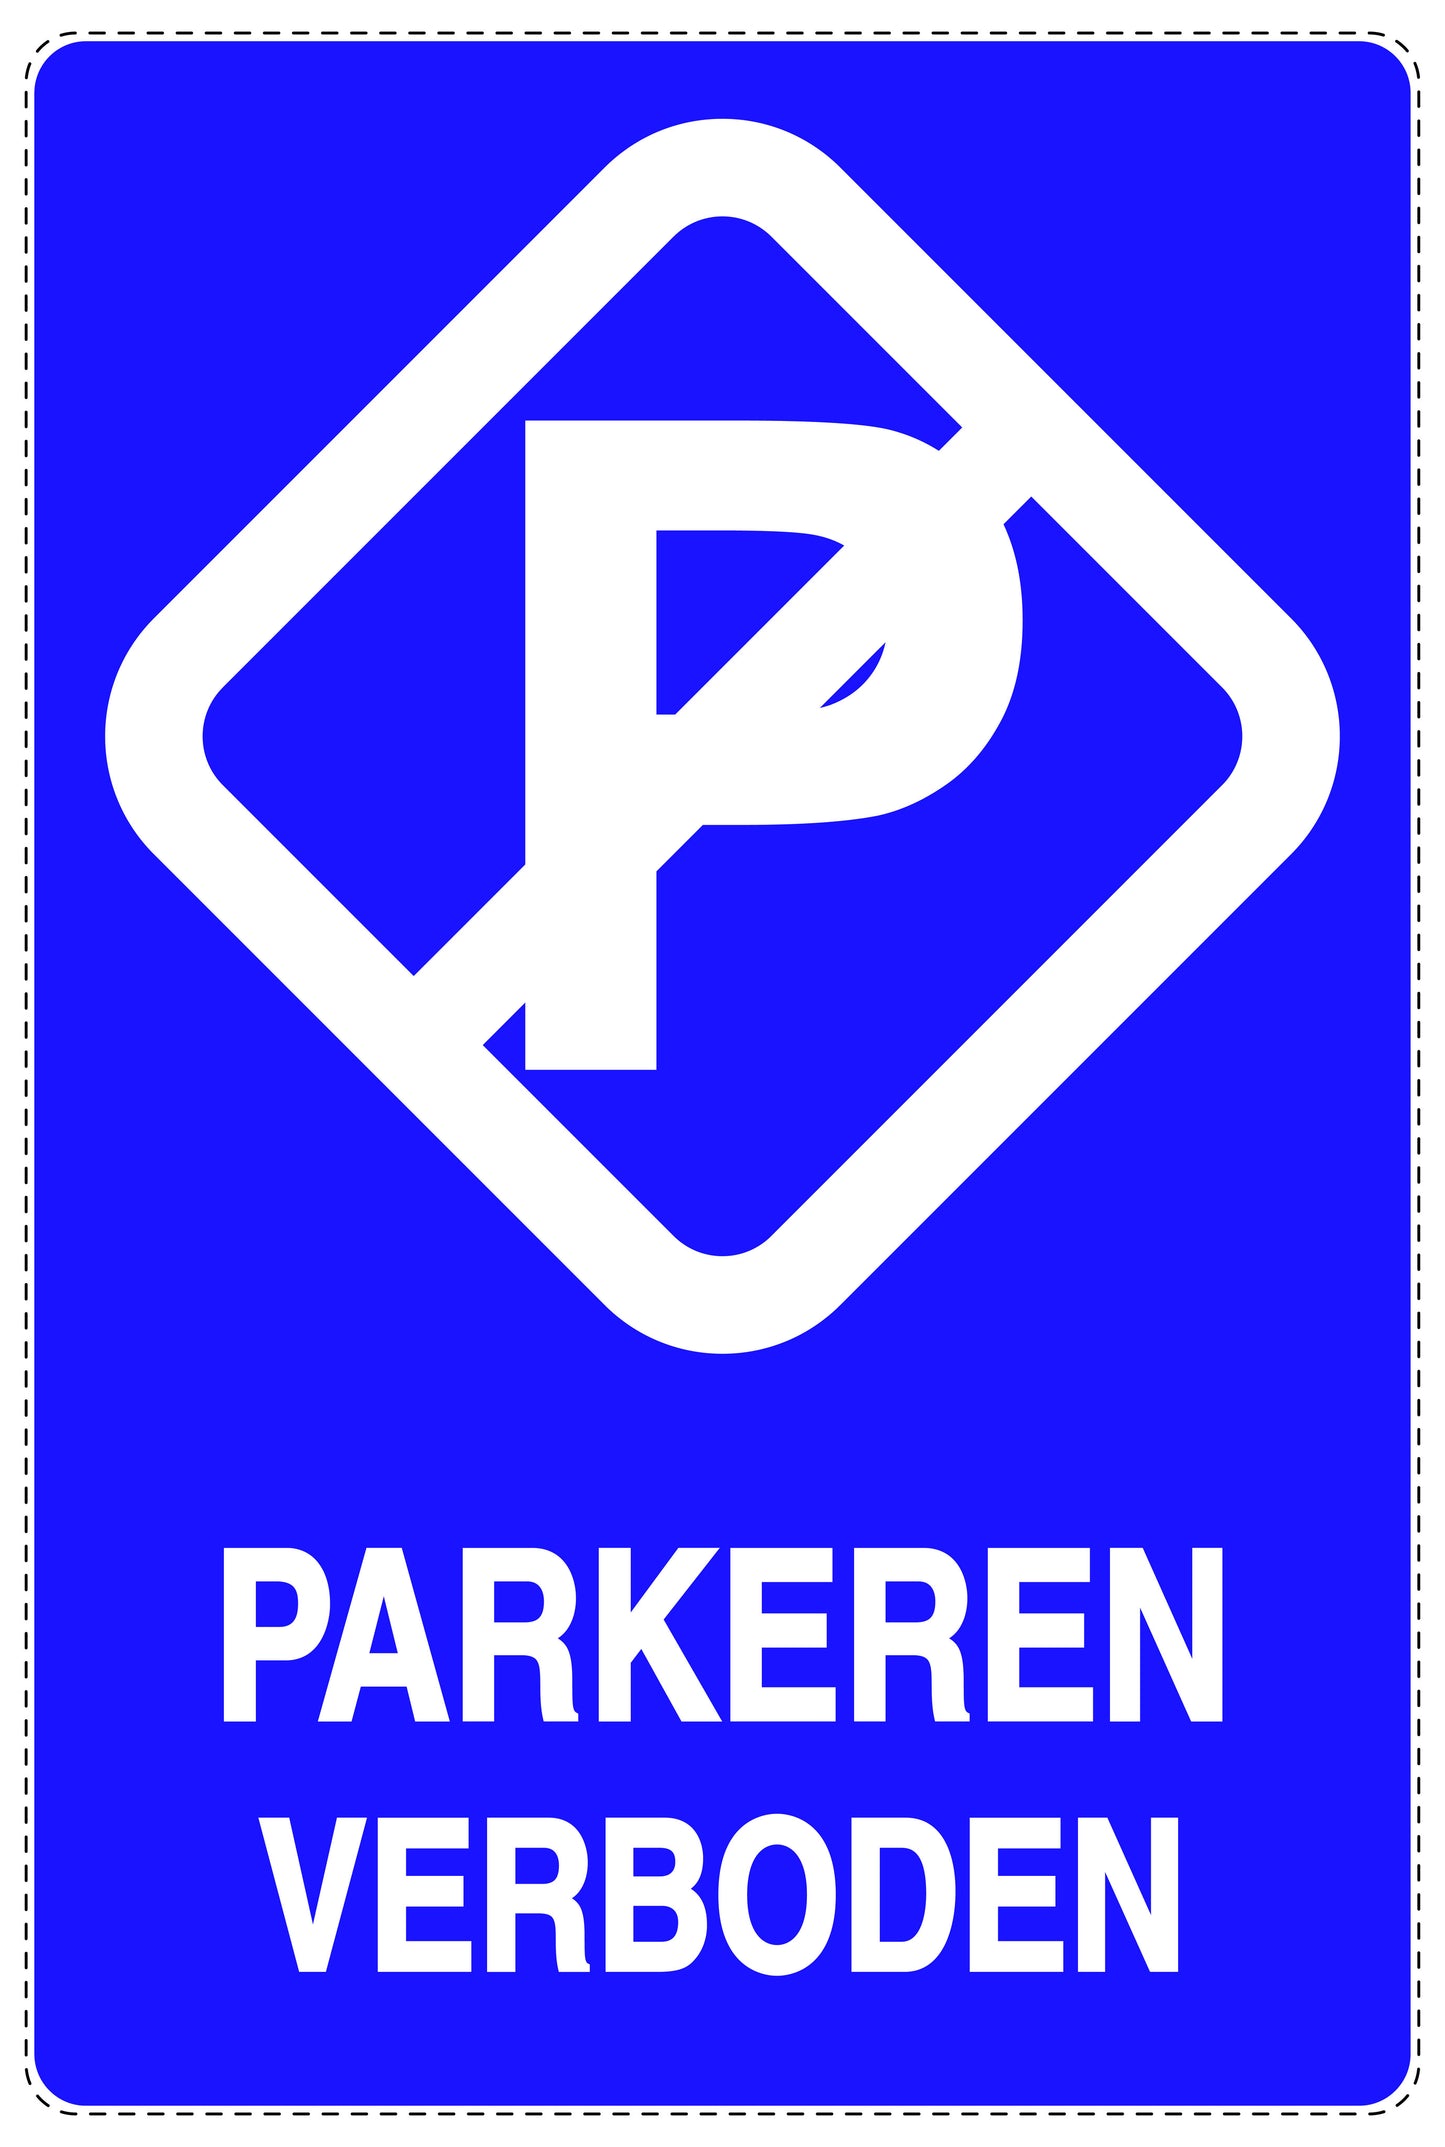 Niet parkeren Sticker "parkeren verboden" EW-NPRK-2230-44